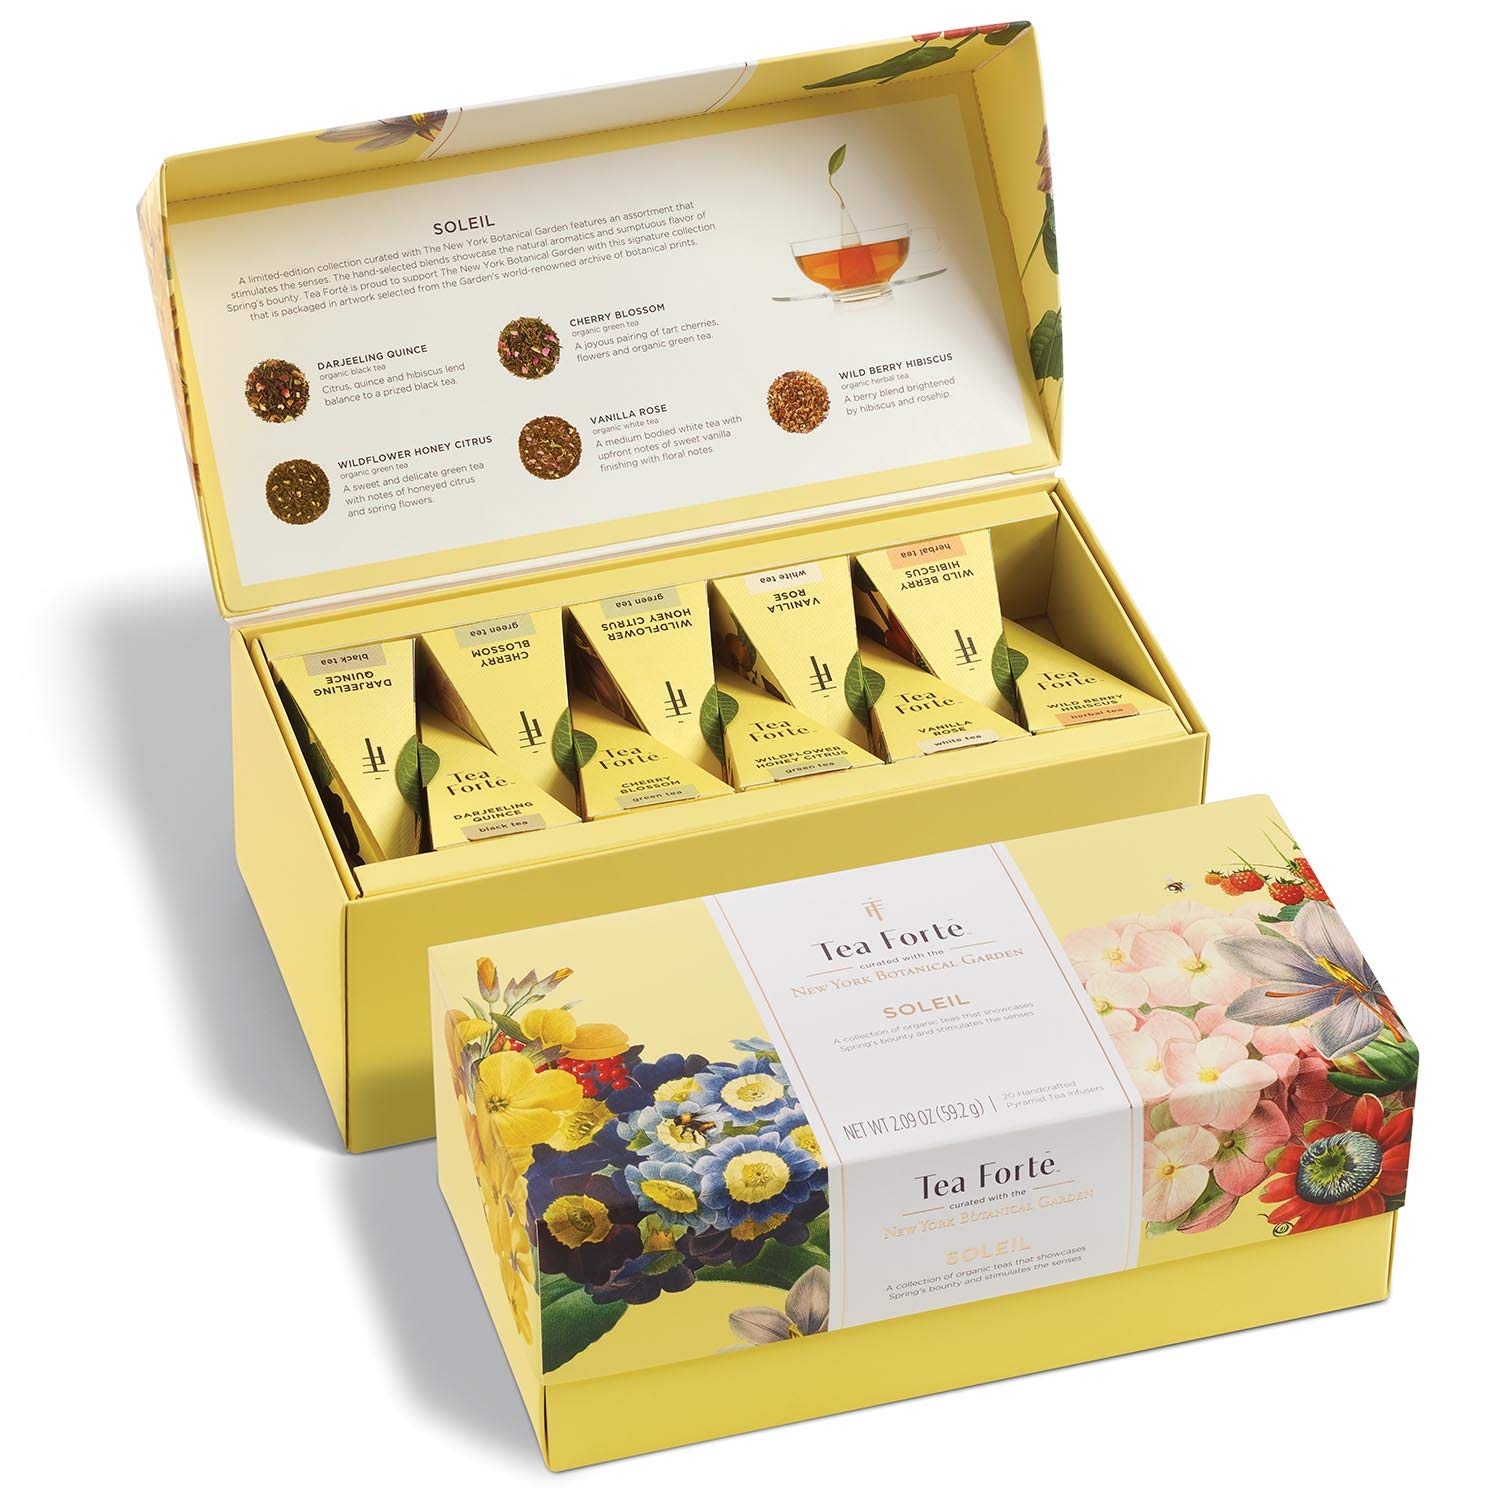 Tea Forte Soleil Tea Sampler with 20 Pyramid Infuser Tea Bags - Fruit, Herb and Flower Tea - Presentation Box Assorted Variety Tea Gift Set